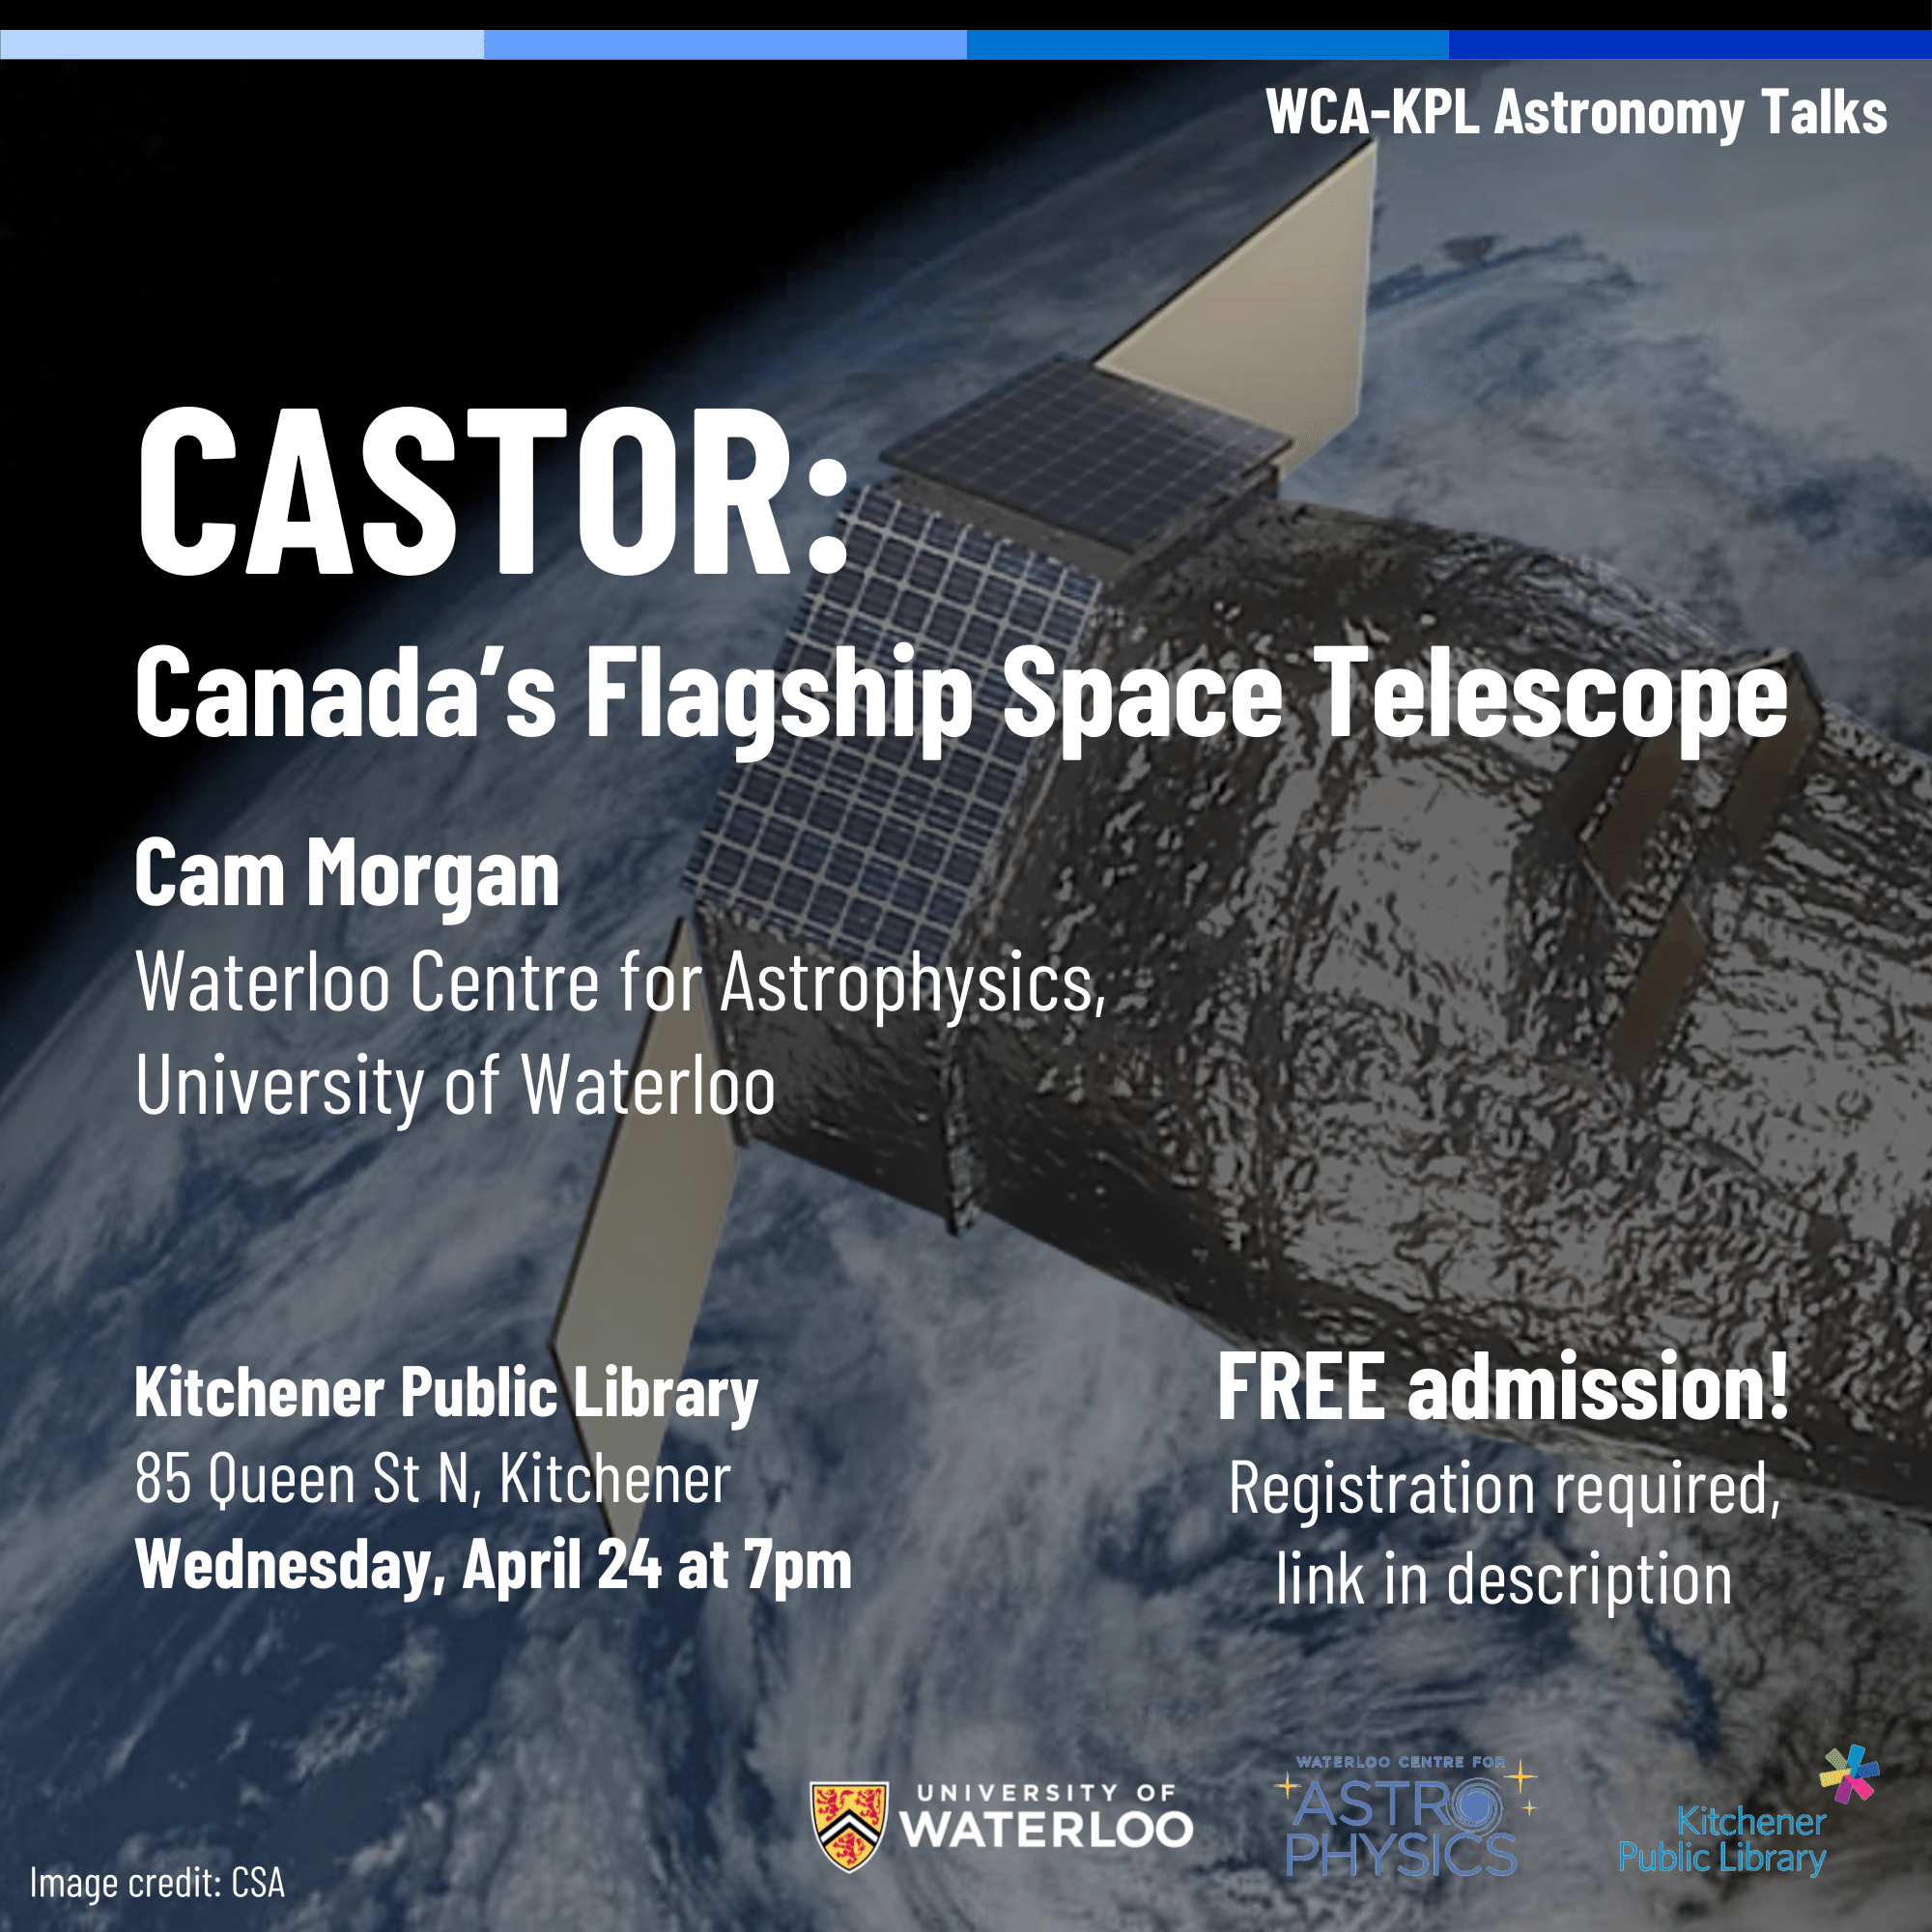 CASTOR: Canada’s Flagship Space Telescope – Public Talk with Cam Morgan at WCA-KPL